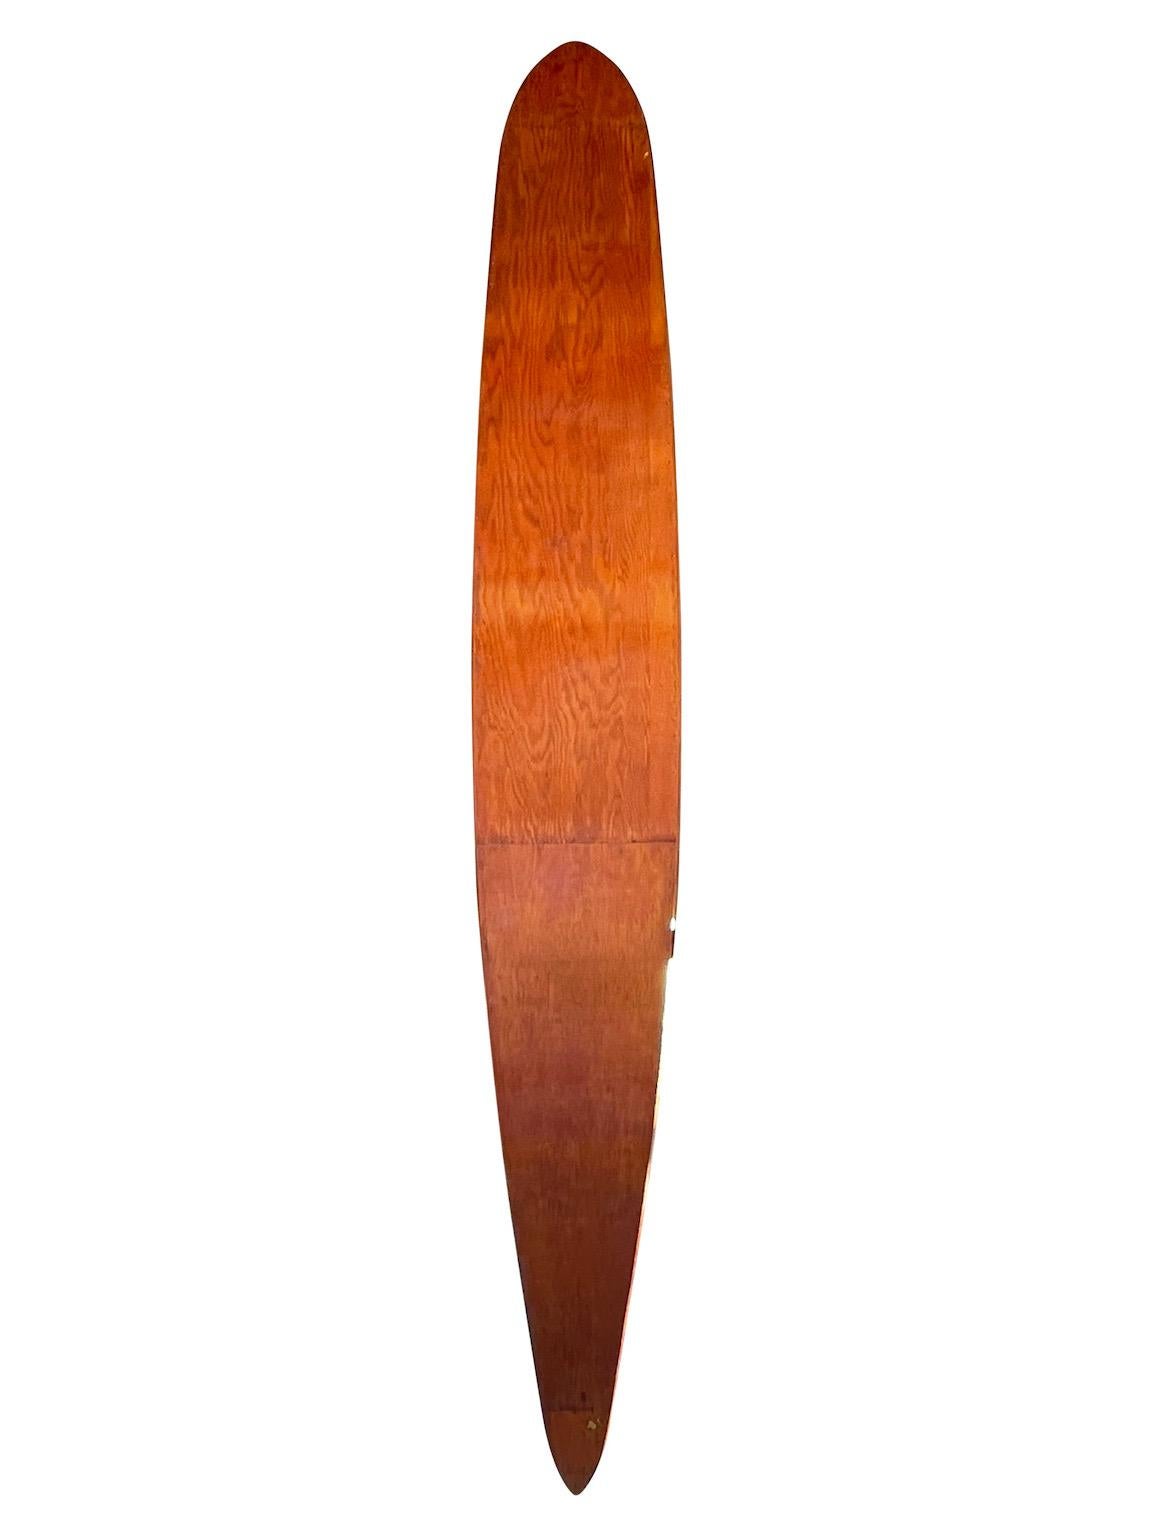 American 1930s-40s Tom Blake Hollow Wooden Surfboard Kookbox